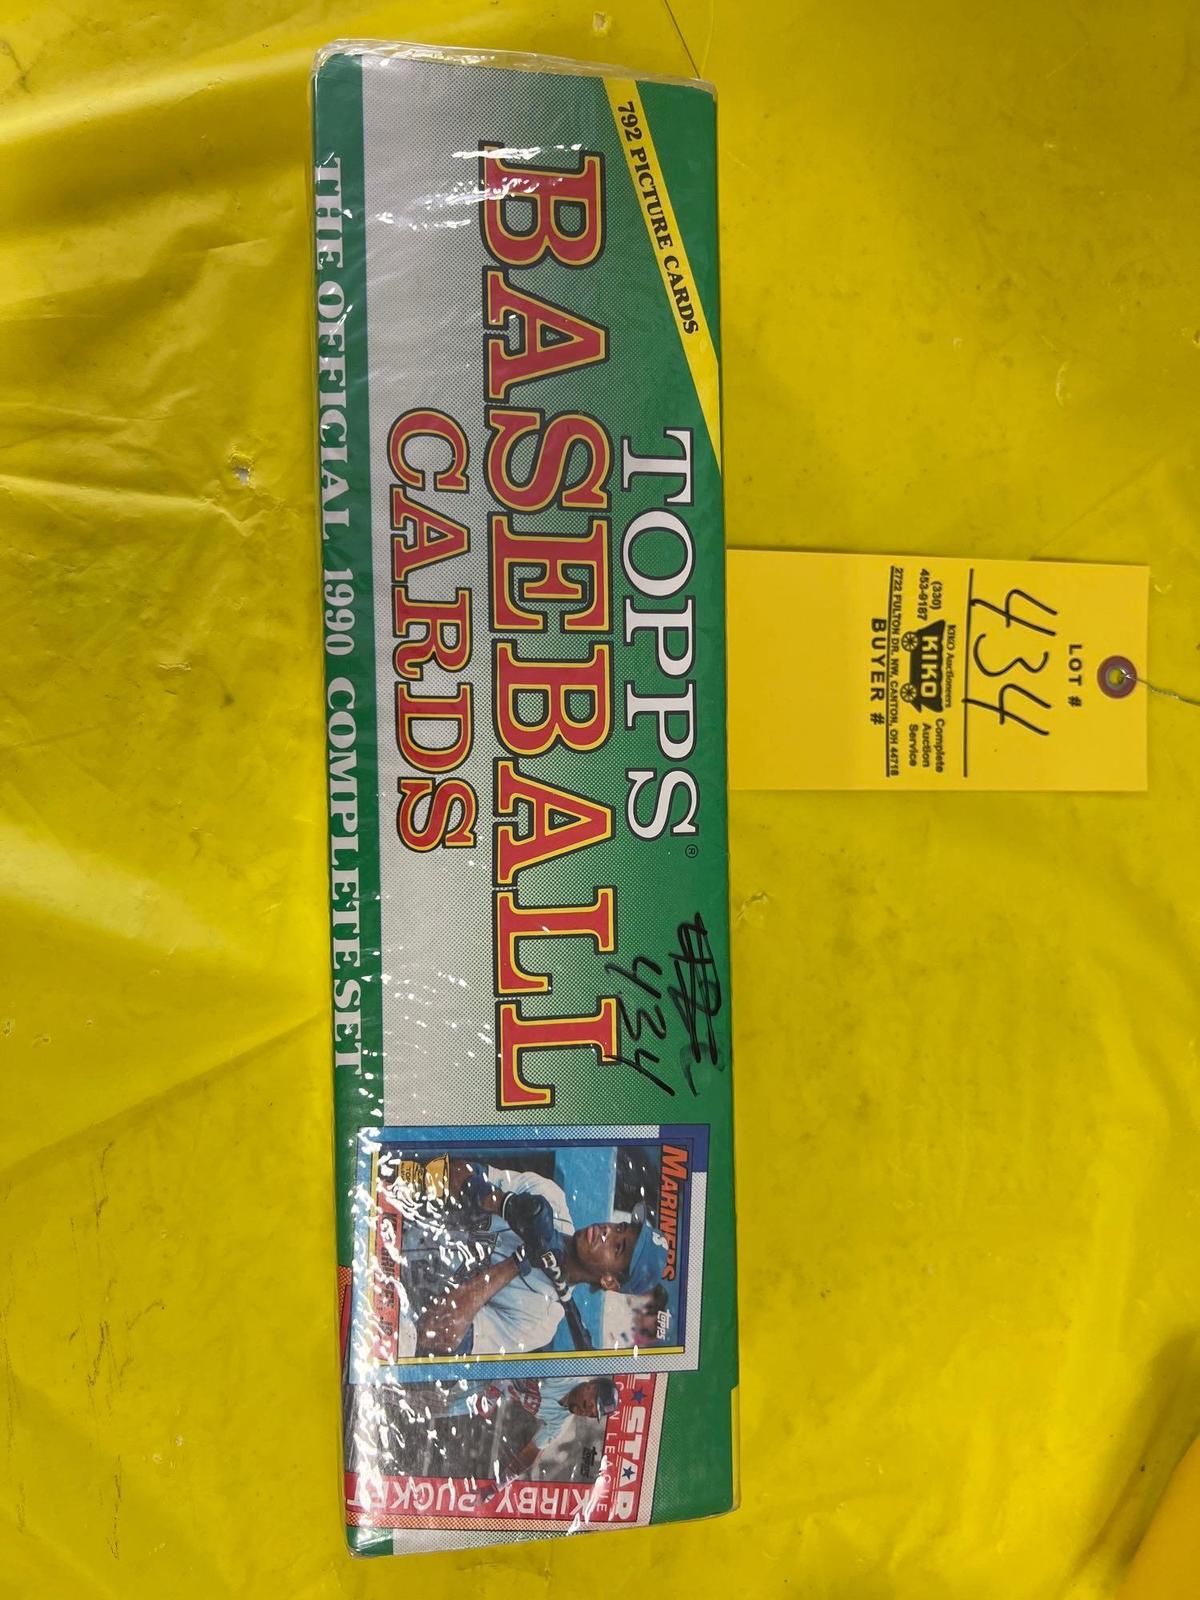 Unopened Sleeve Of Topps 1990 Baseball Cards